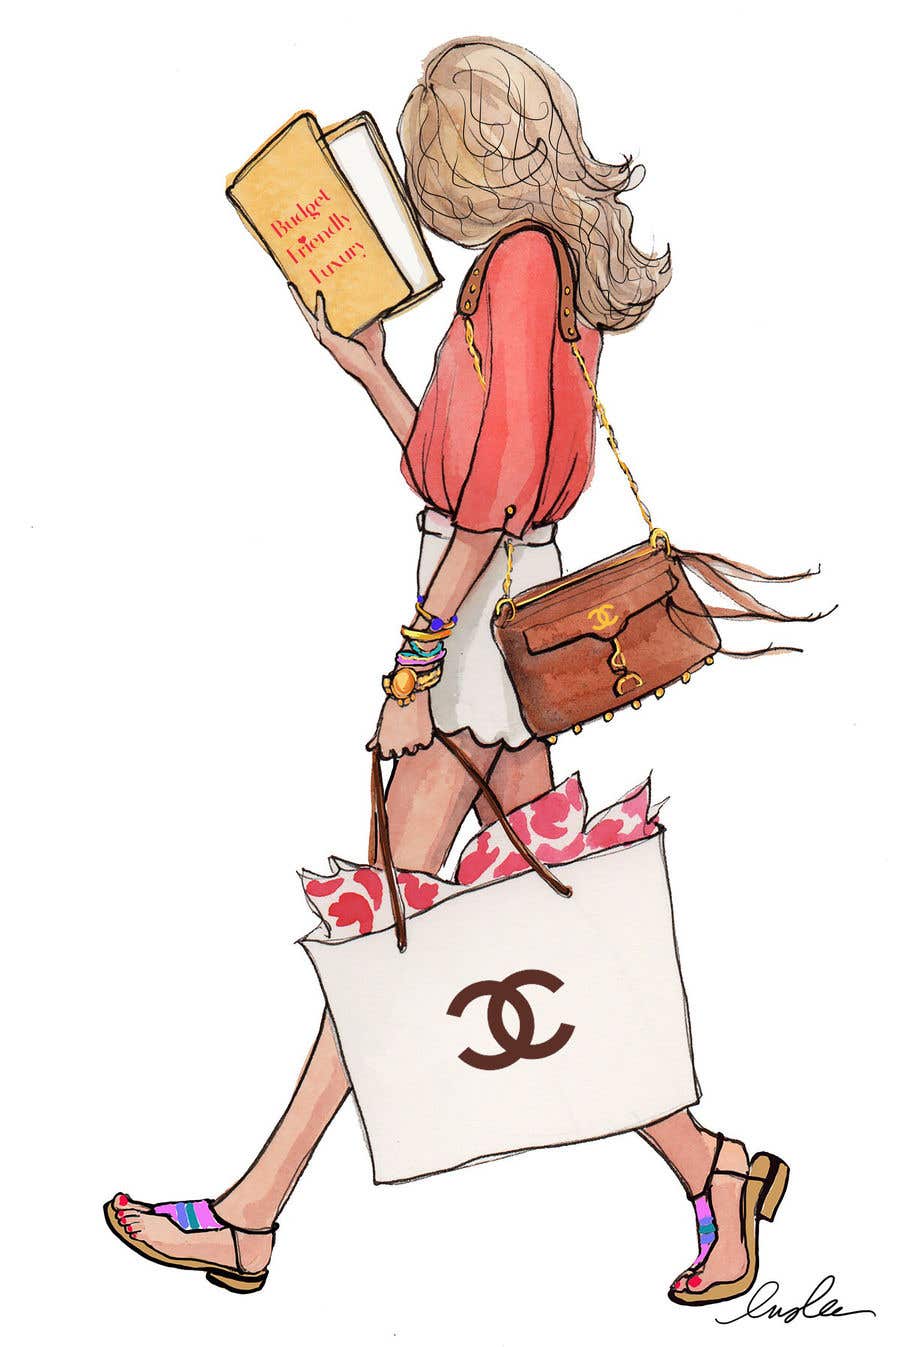 Penyertaan Peraduan #18 untuk                                                 Change title of book to “Budget Friendly Luxury” 
Change logo on bag to Chanel
Change girls hair to curly
                                            